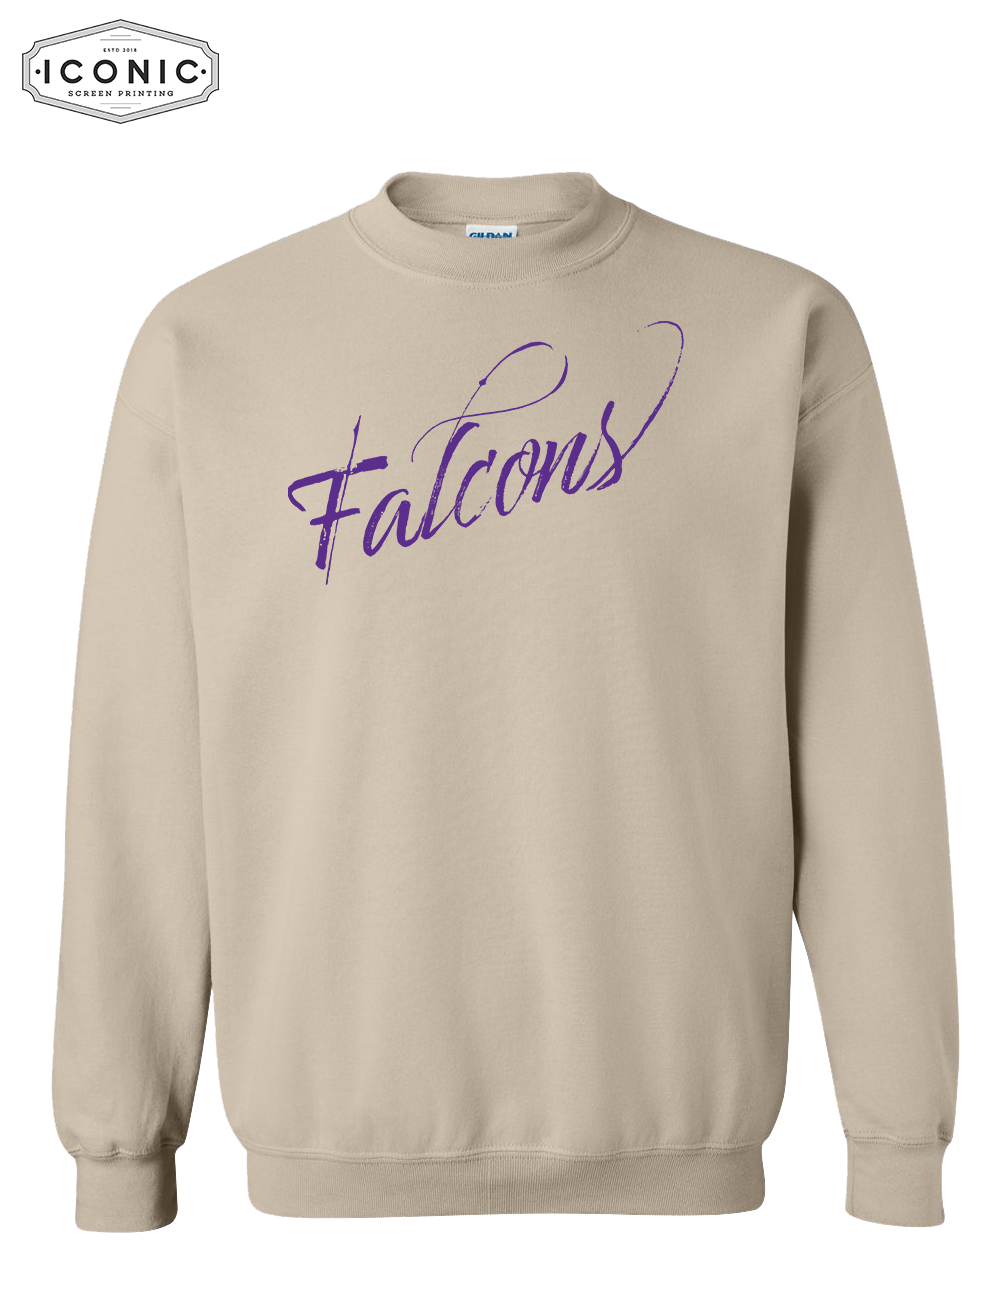 Falcons Script - Heavy Blend Sweatshirt